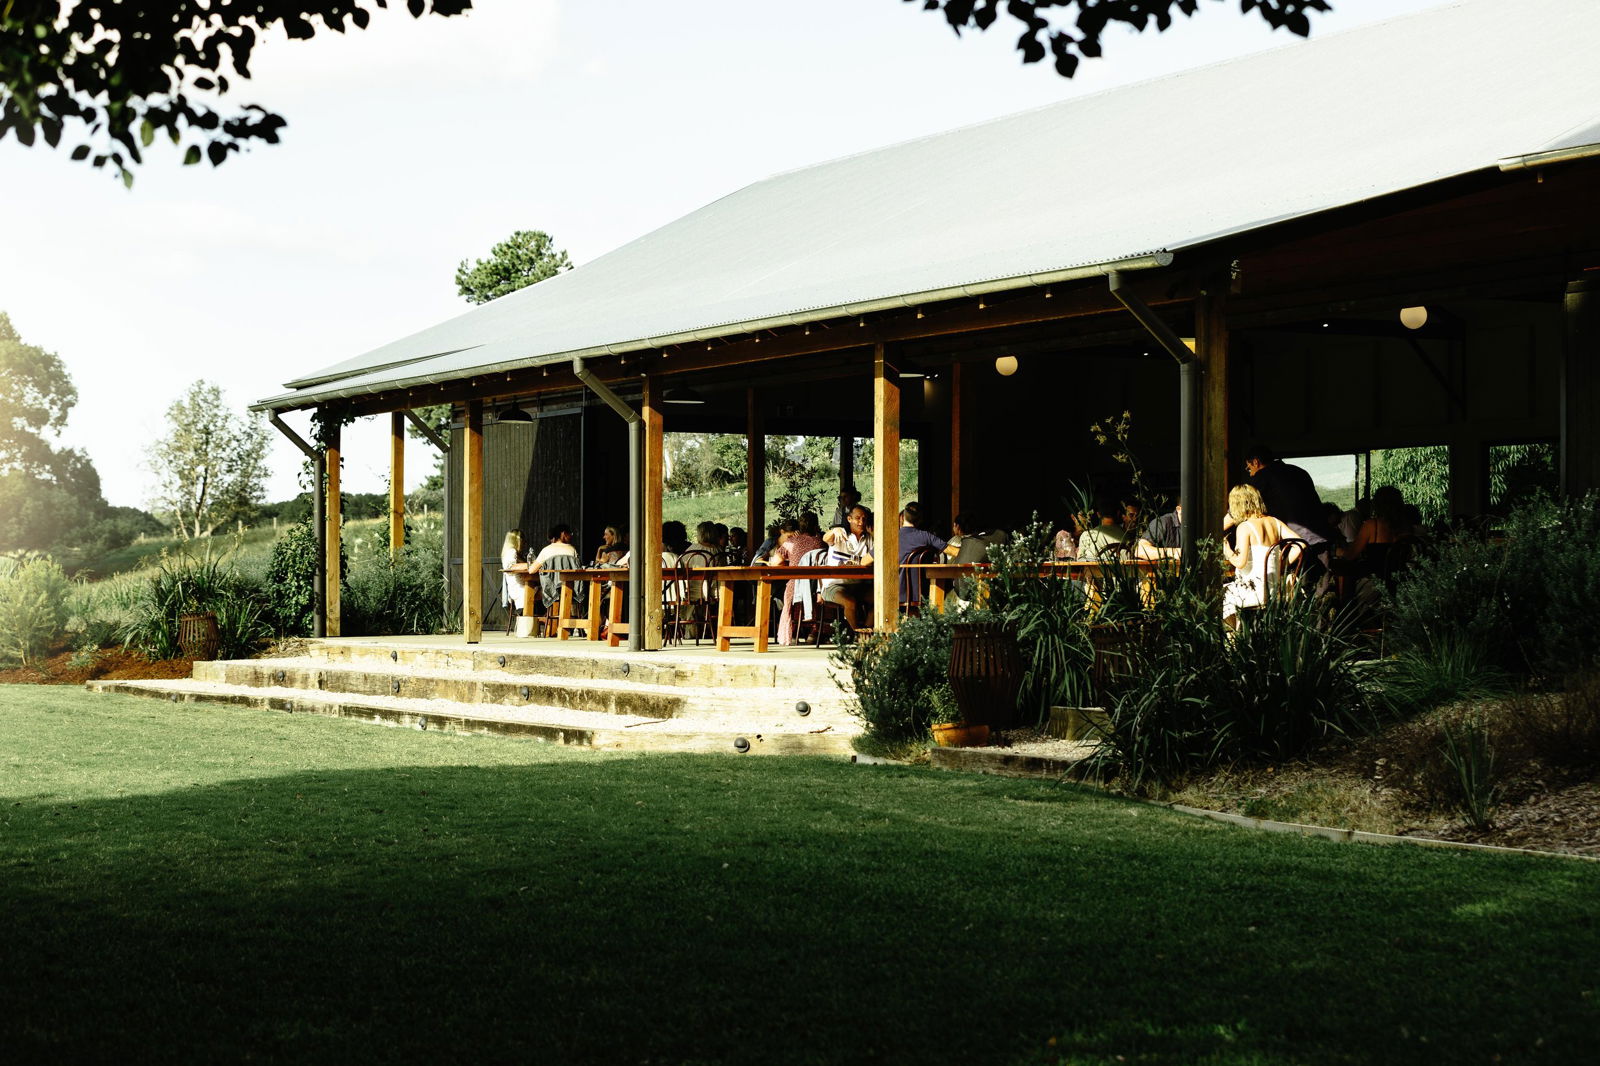 Restaurant portion of Frida's Field right outside Byron Bay